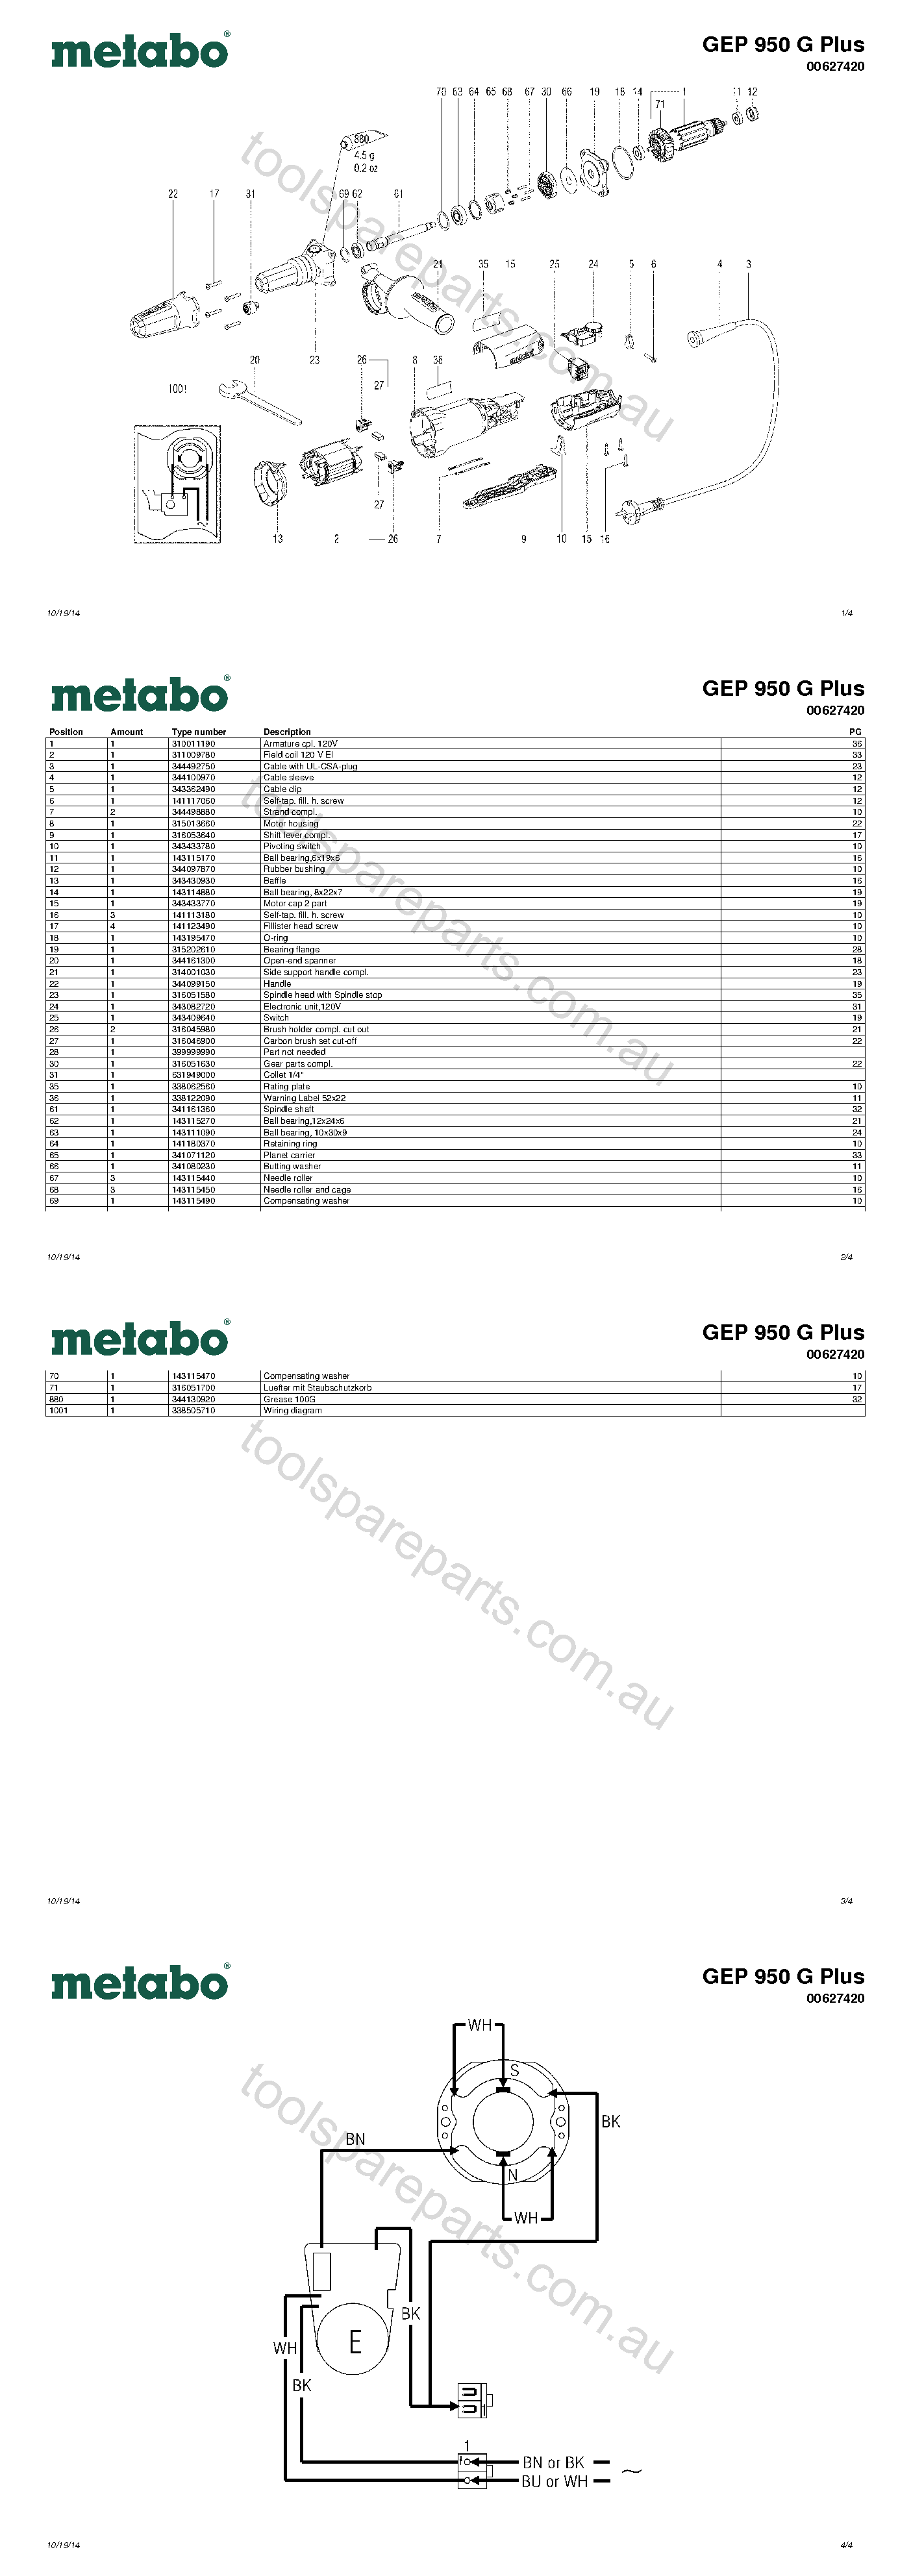 Metabo GEP 950 G Plus 00627420  Diagram 1